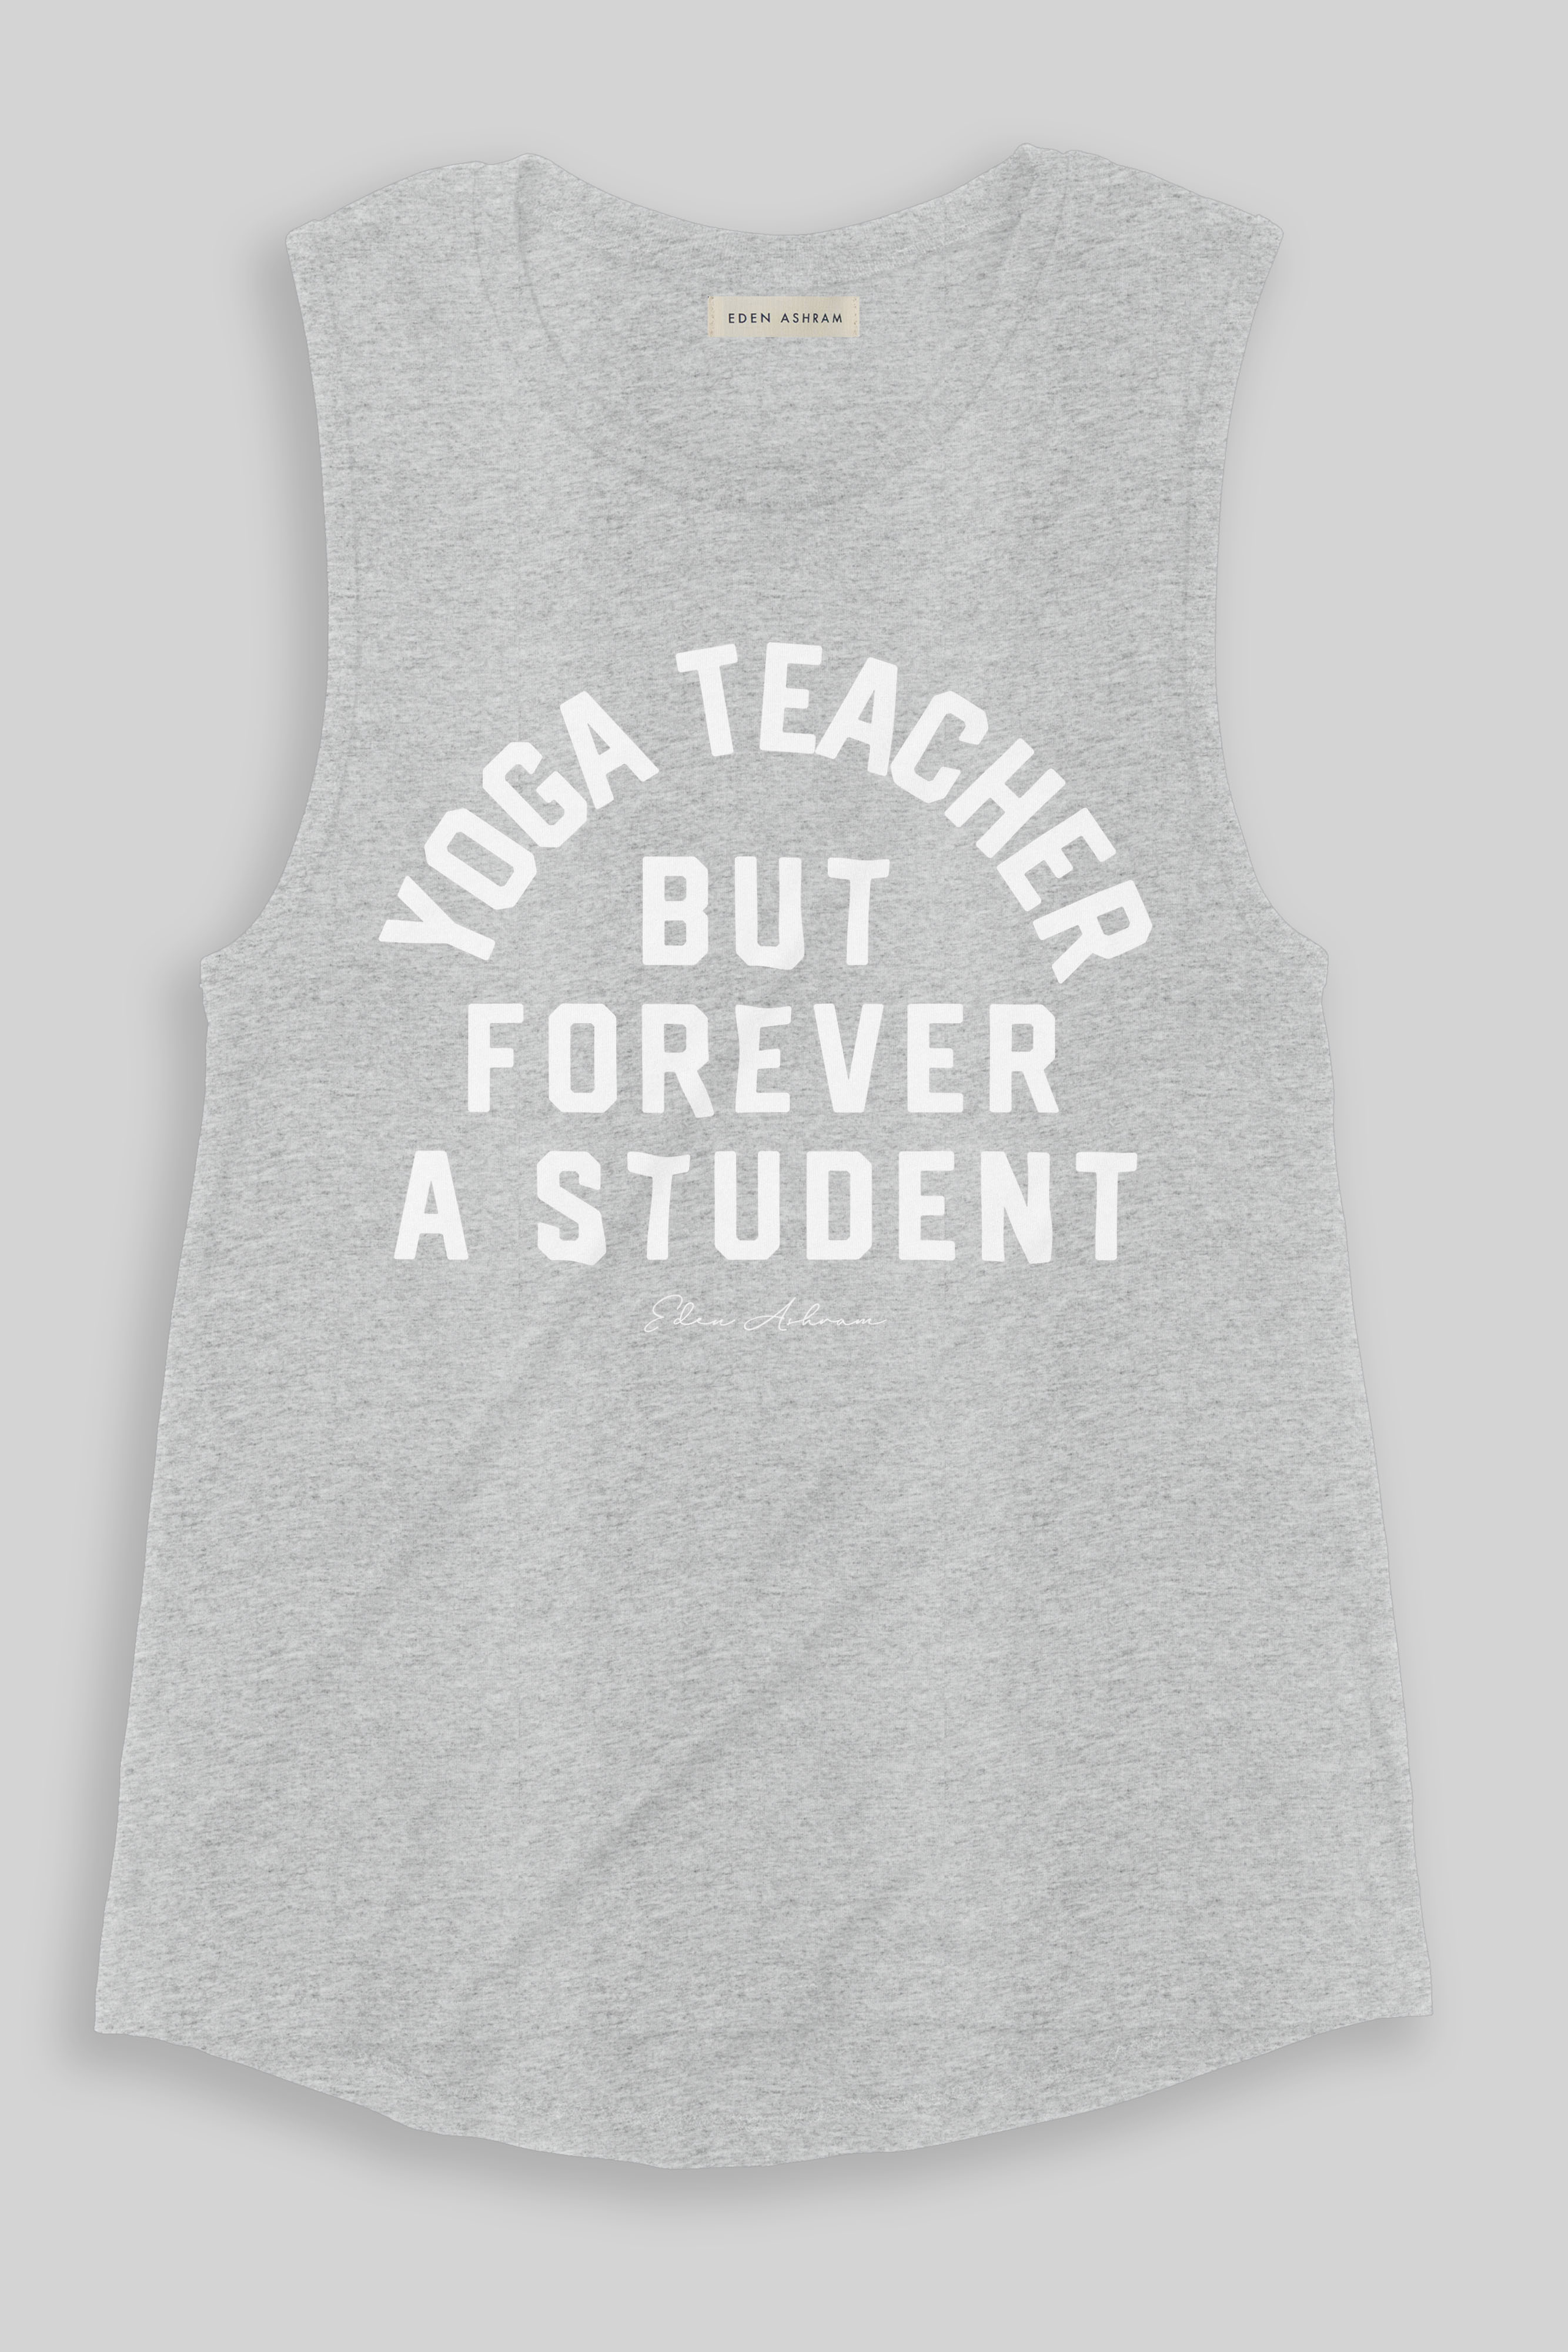 EDEN ASHRAM Yoga Teacher But Forever A Student Jersey Muscle Tank Heather Grey